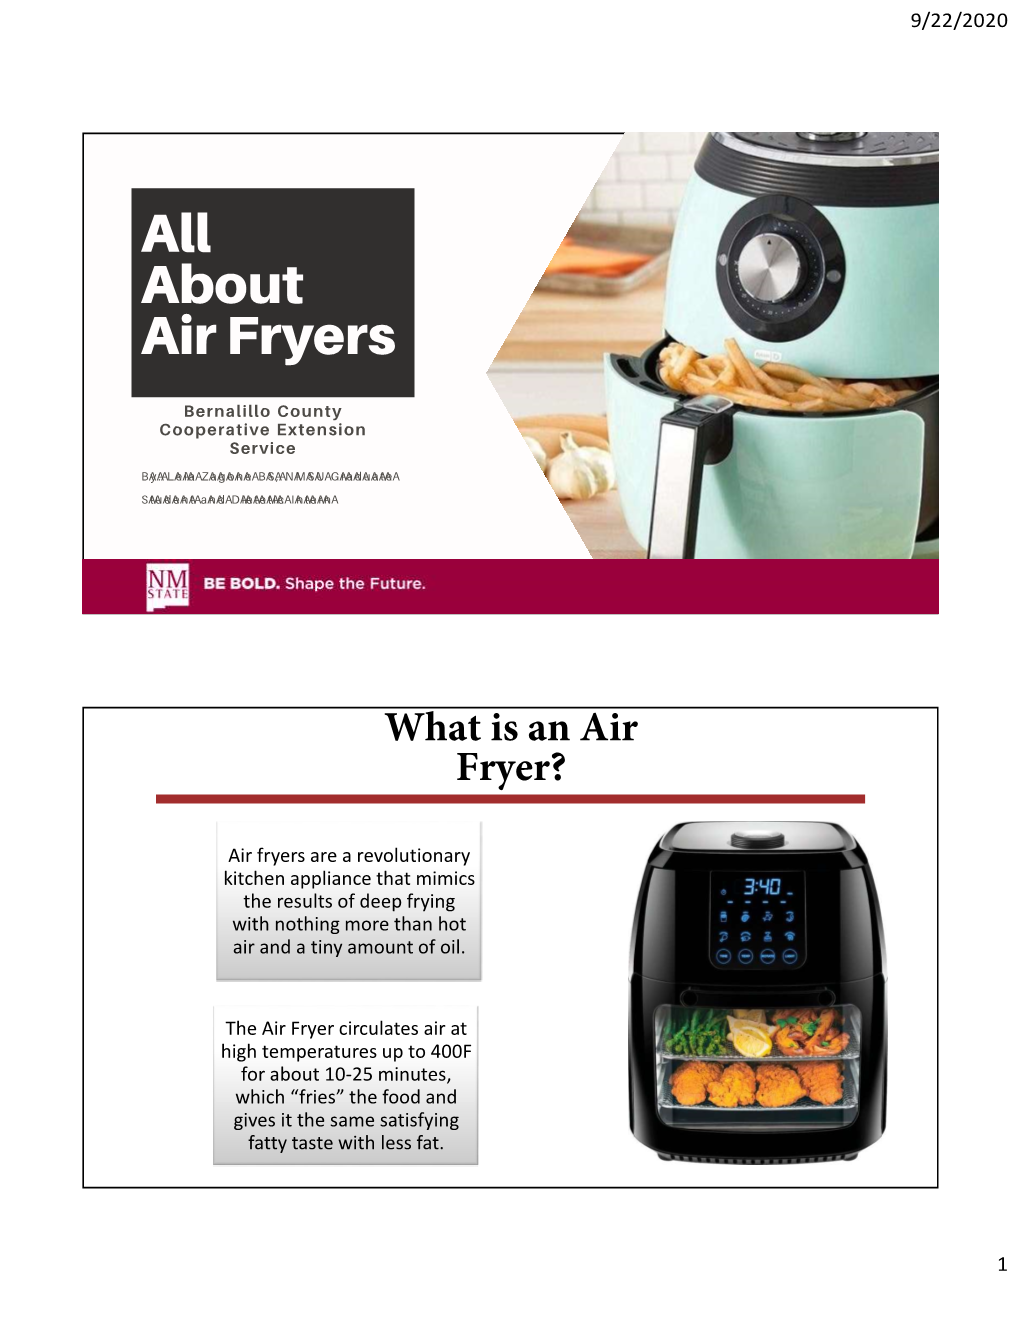 Air Fryer Presentation